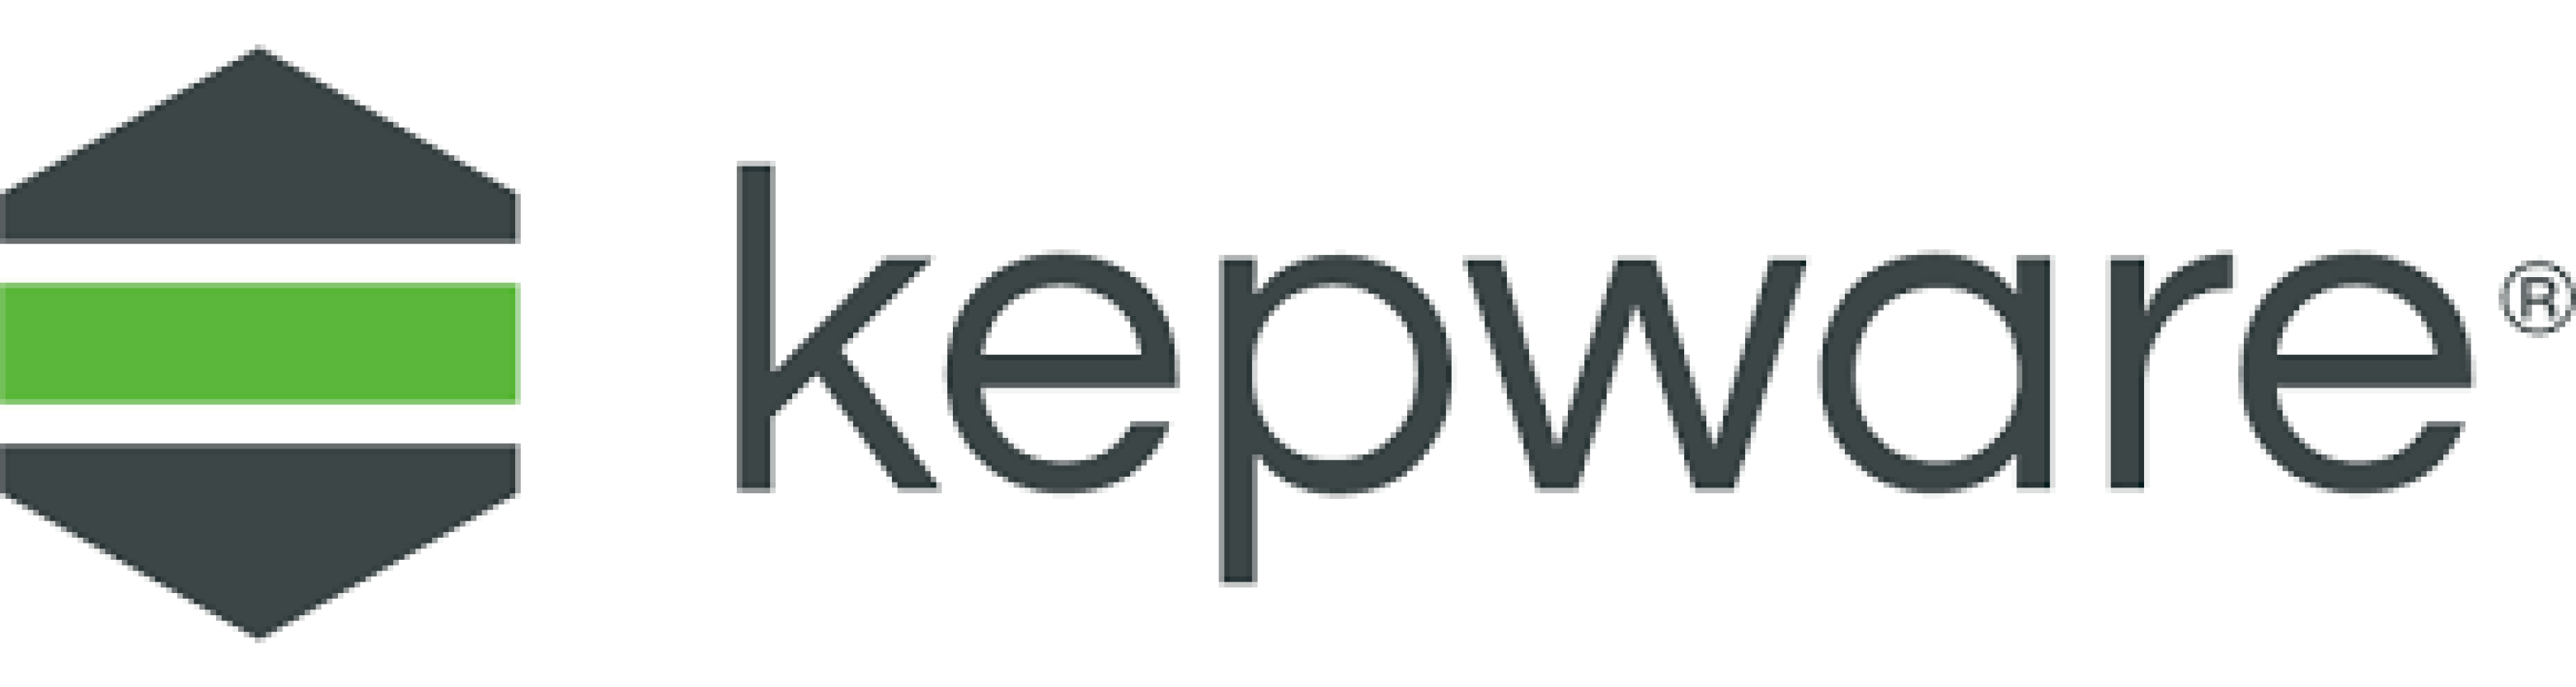 Kepware logo intro2